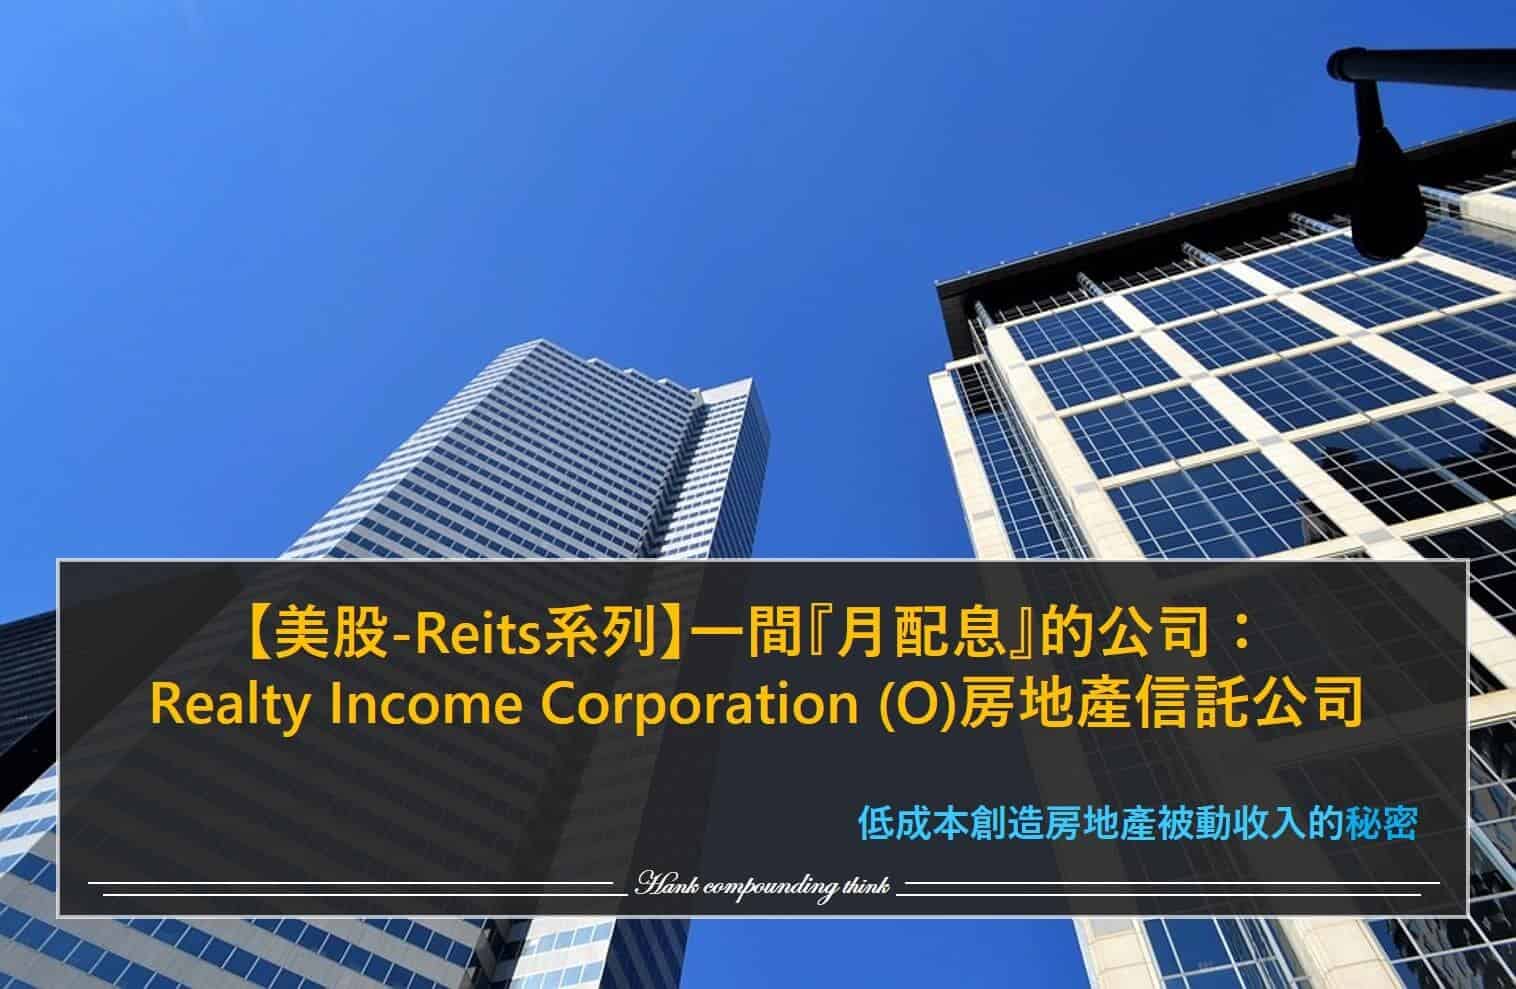 Realty Income Corporation (O)房地產信託公司